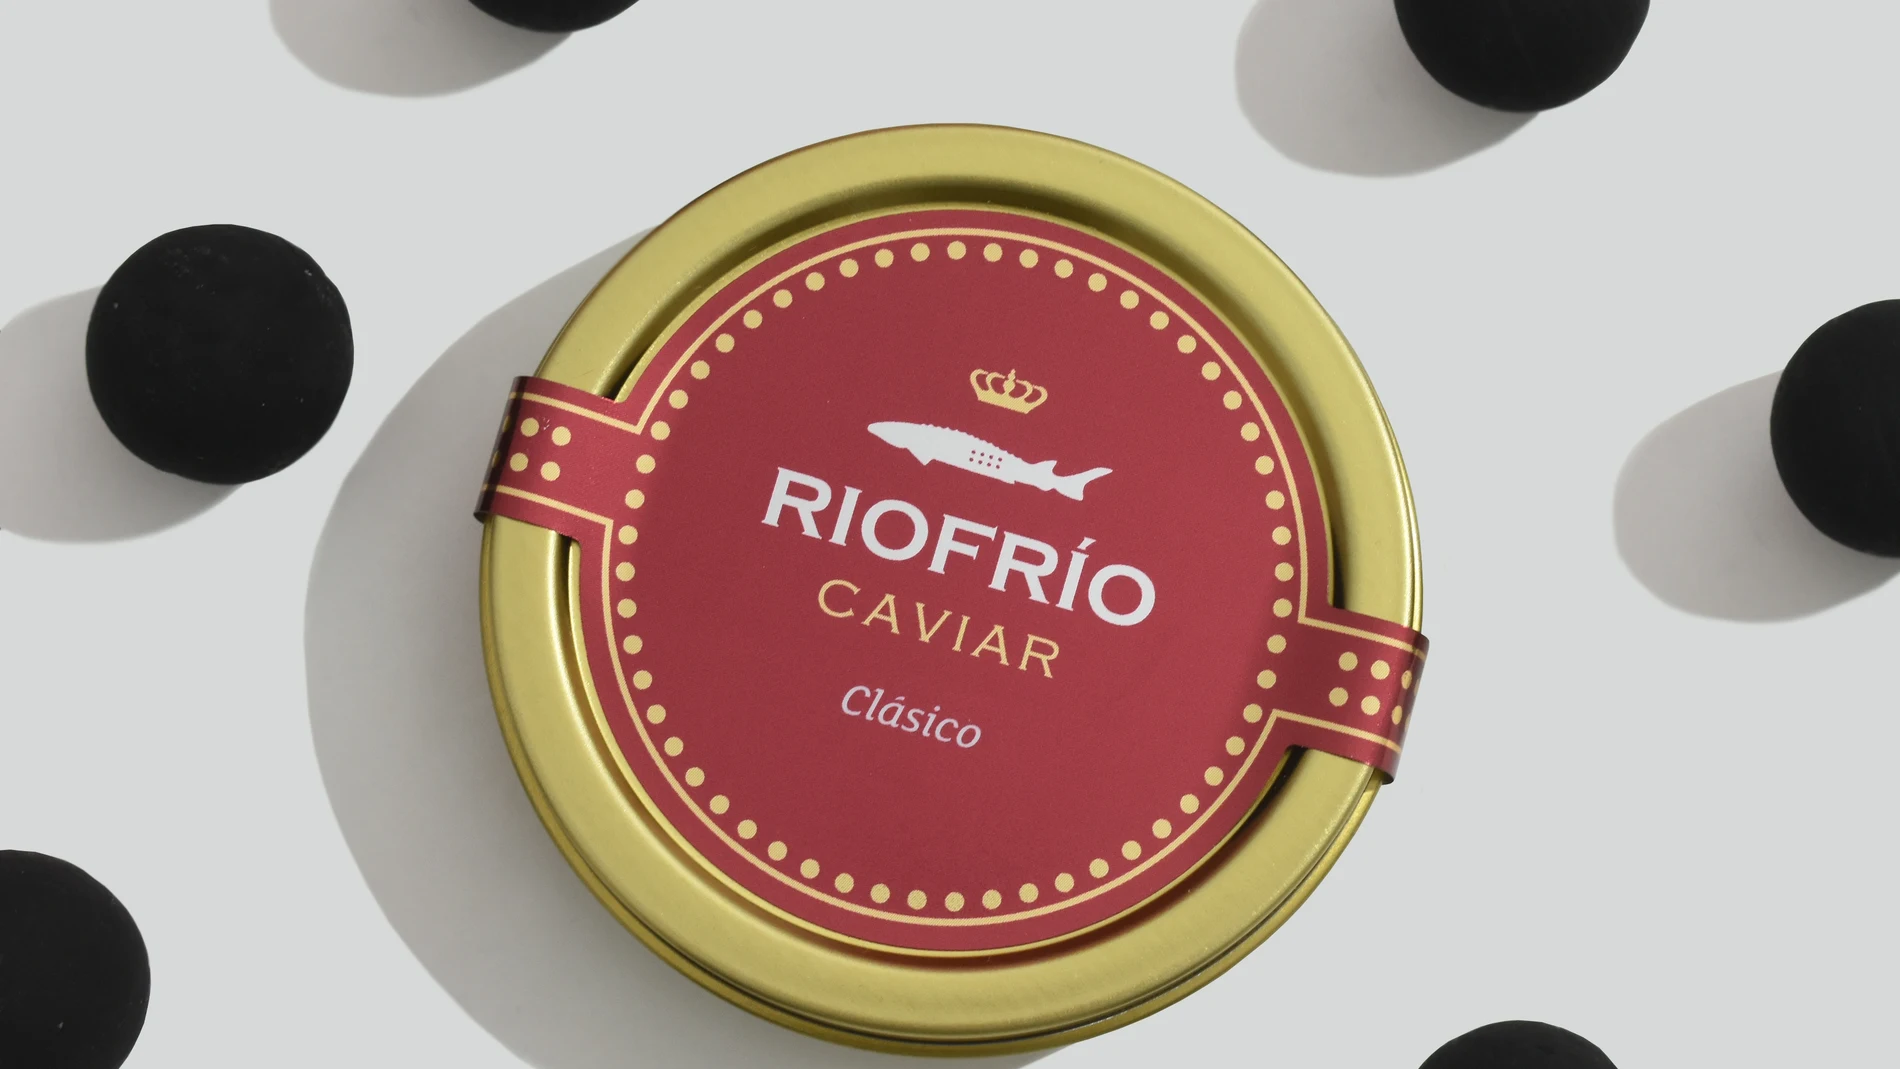 Caviar Riofrío